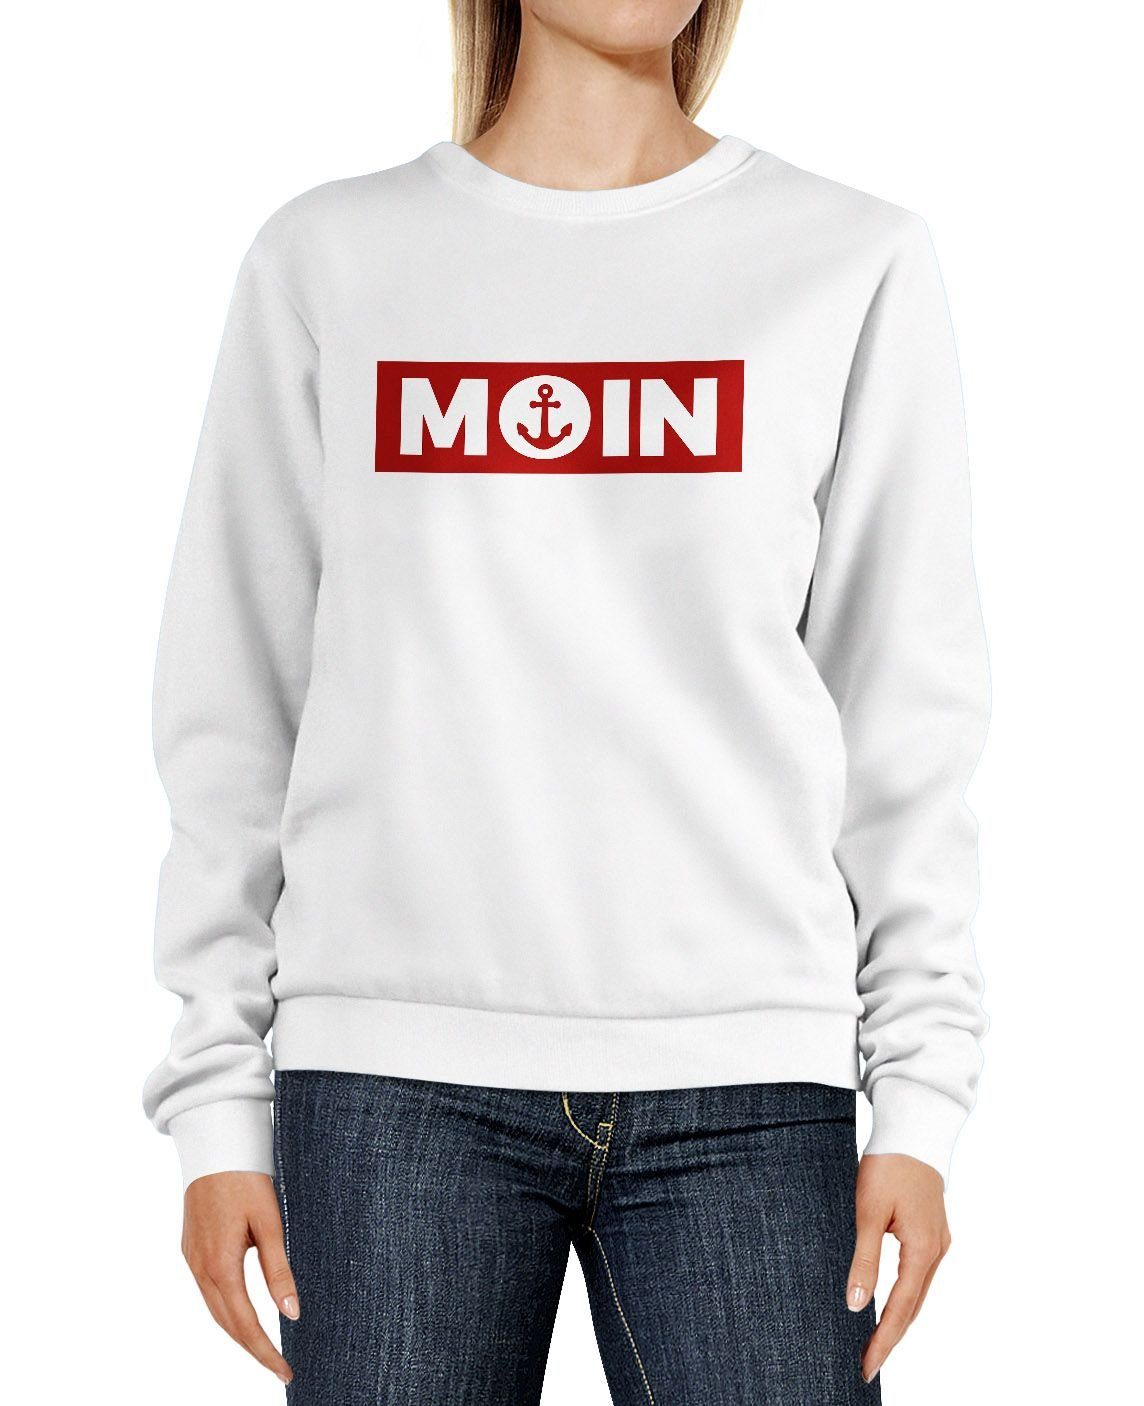 MoonWorks Sweatshirt Herren AHOI mit Anker Print Rundhals-Pullover